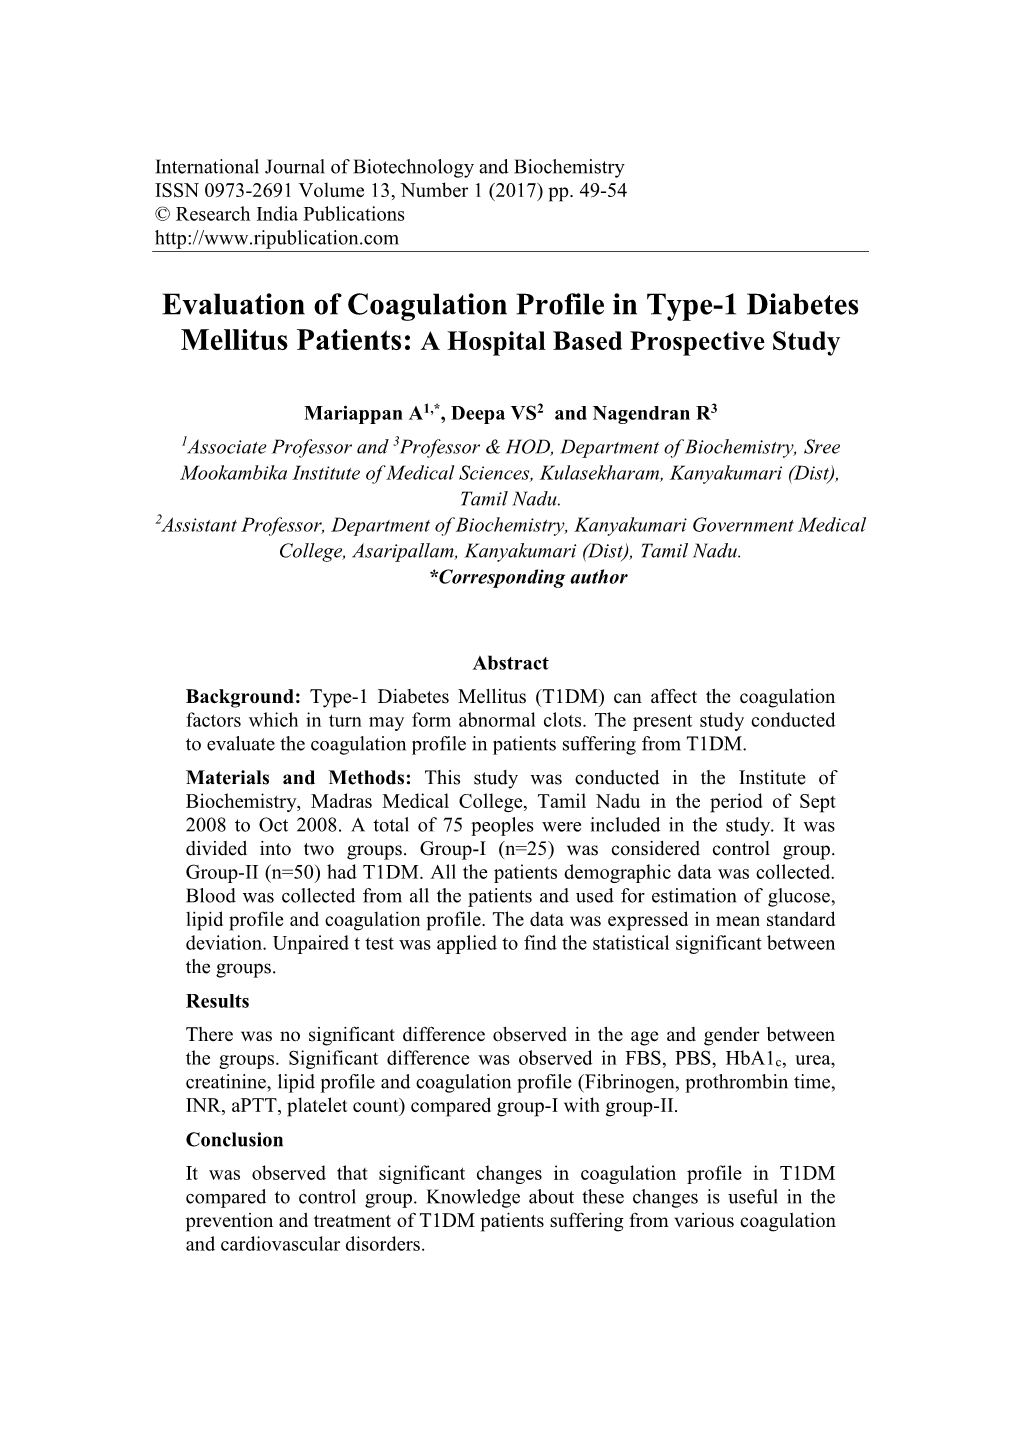 Evaluation of Coagulation Profile in Type-1 Diabetes Mellitus Patients: a Hospital Based Prospective Study